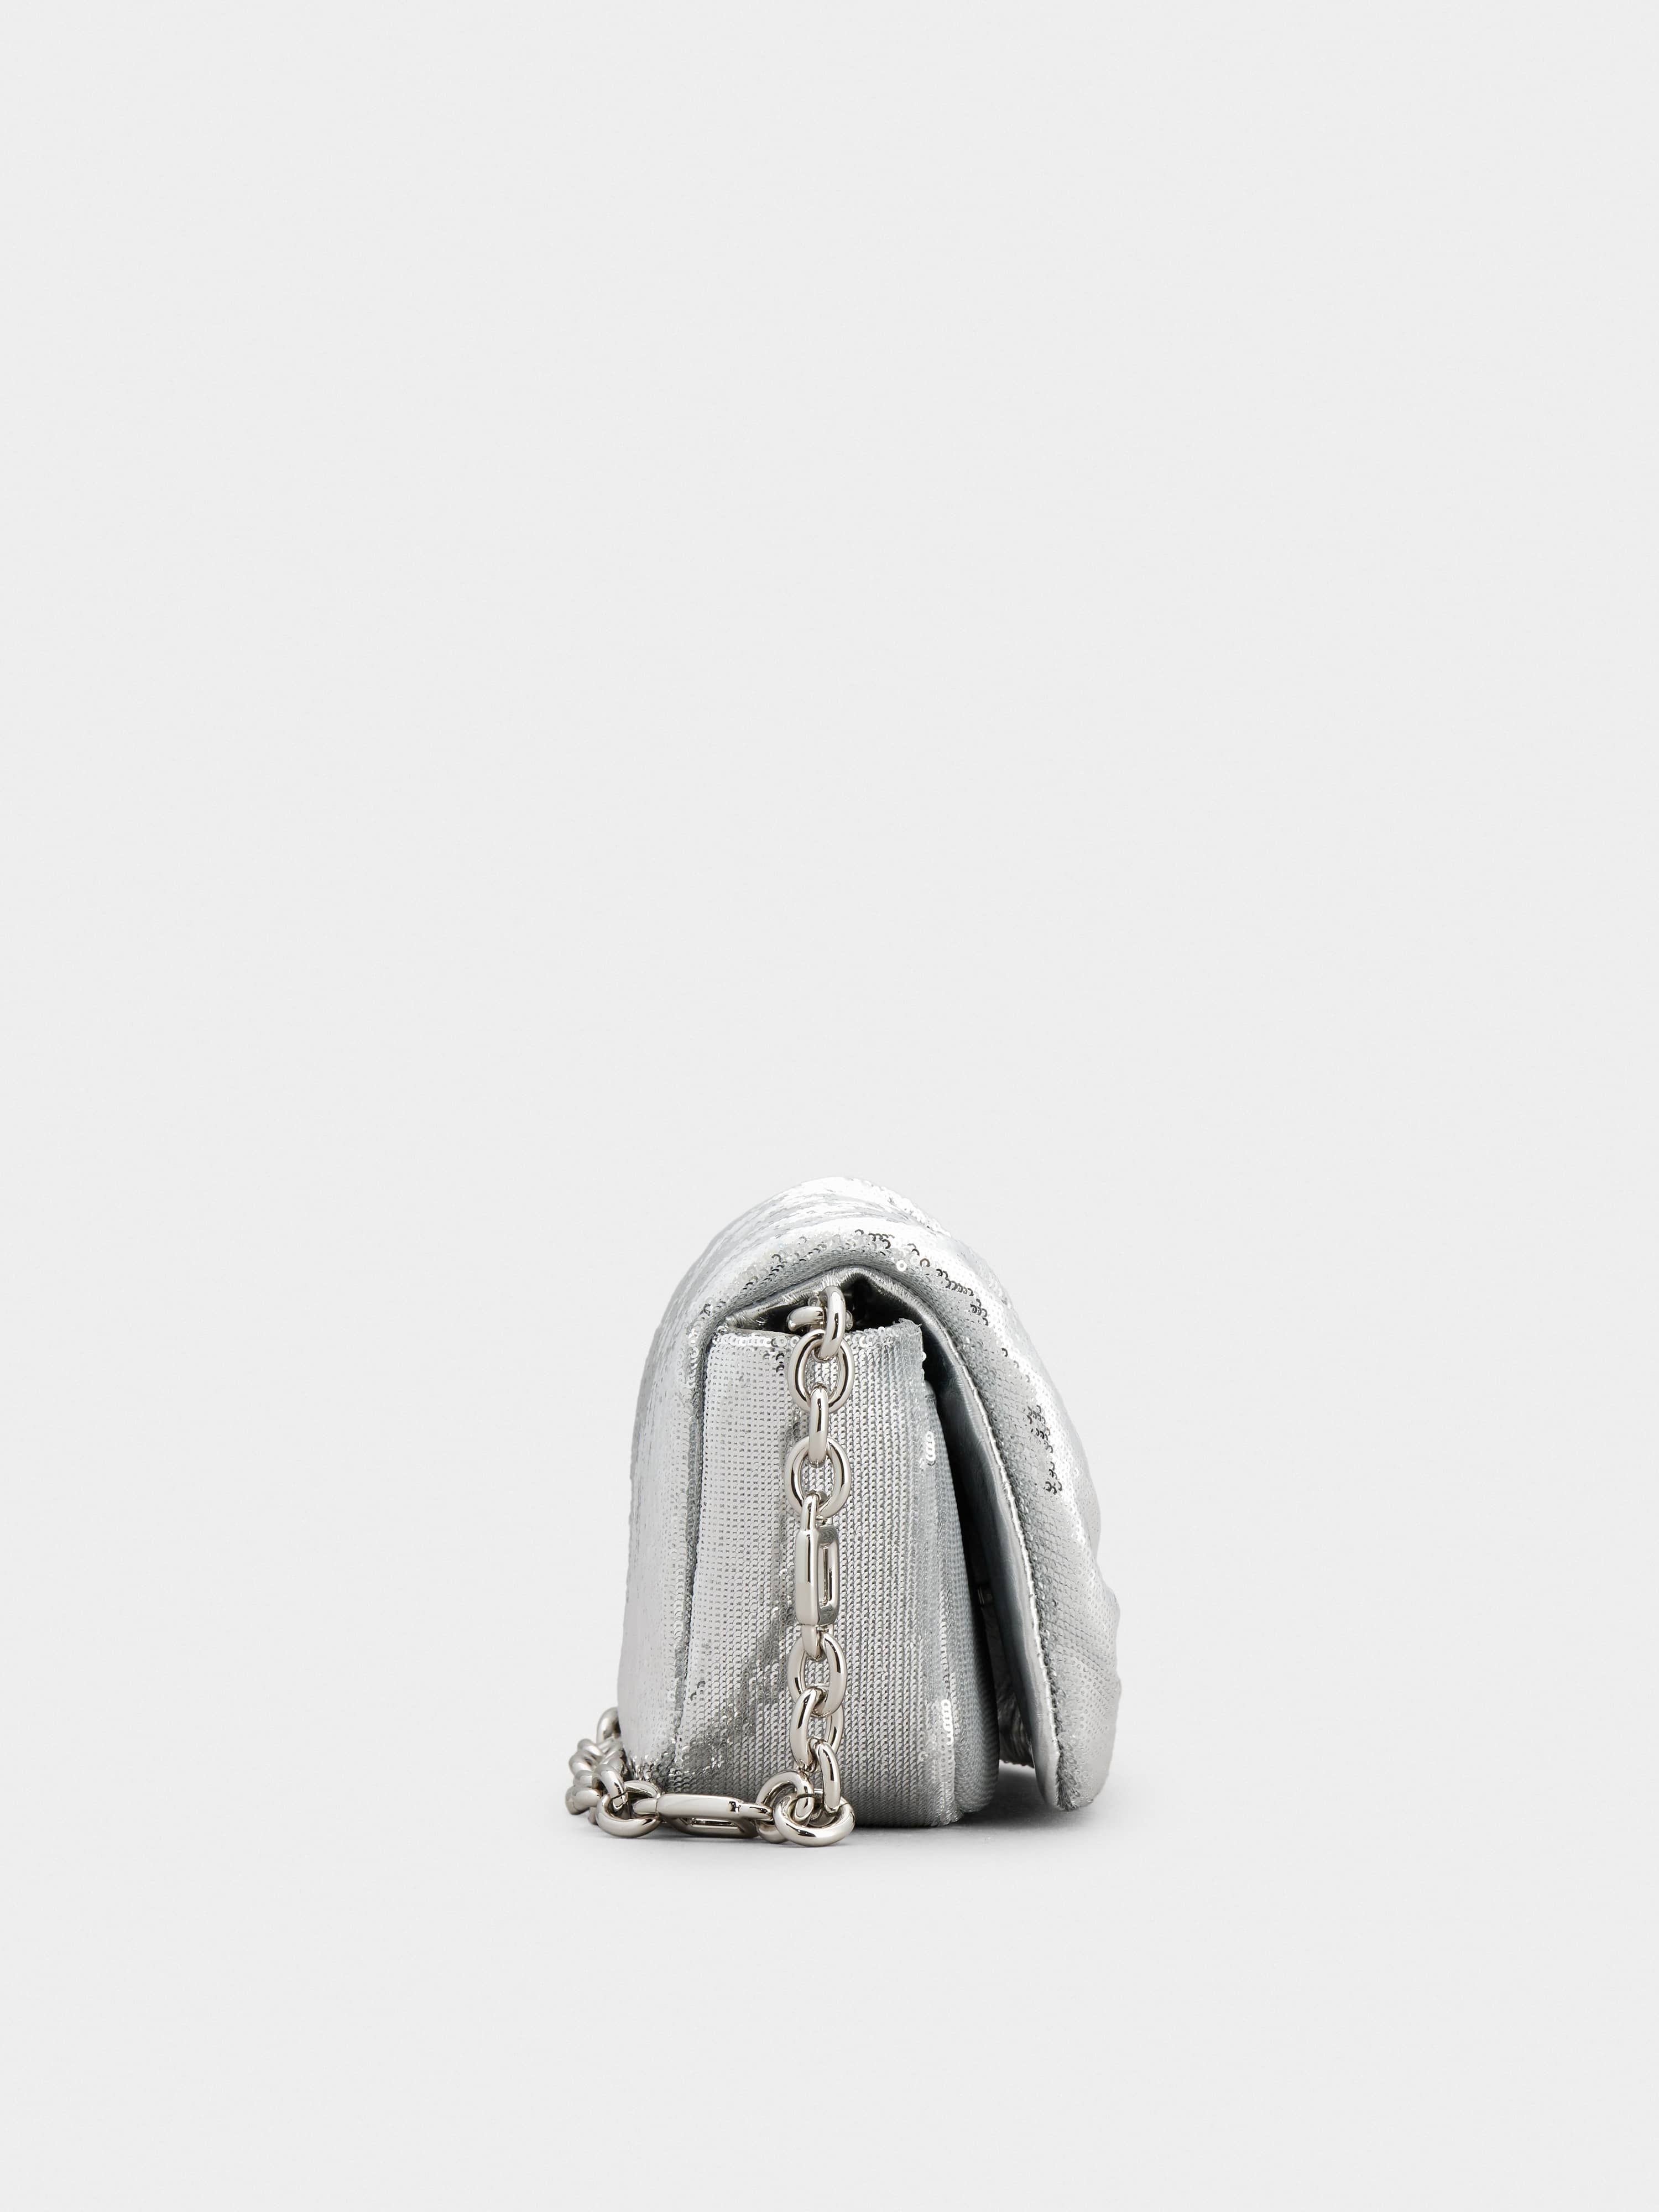 Viv' Choc Paillettes Mini Bag in Fabric - 4